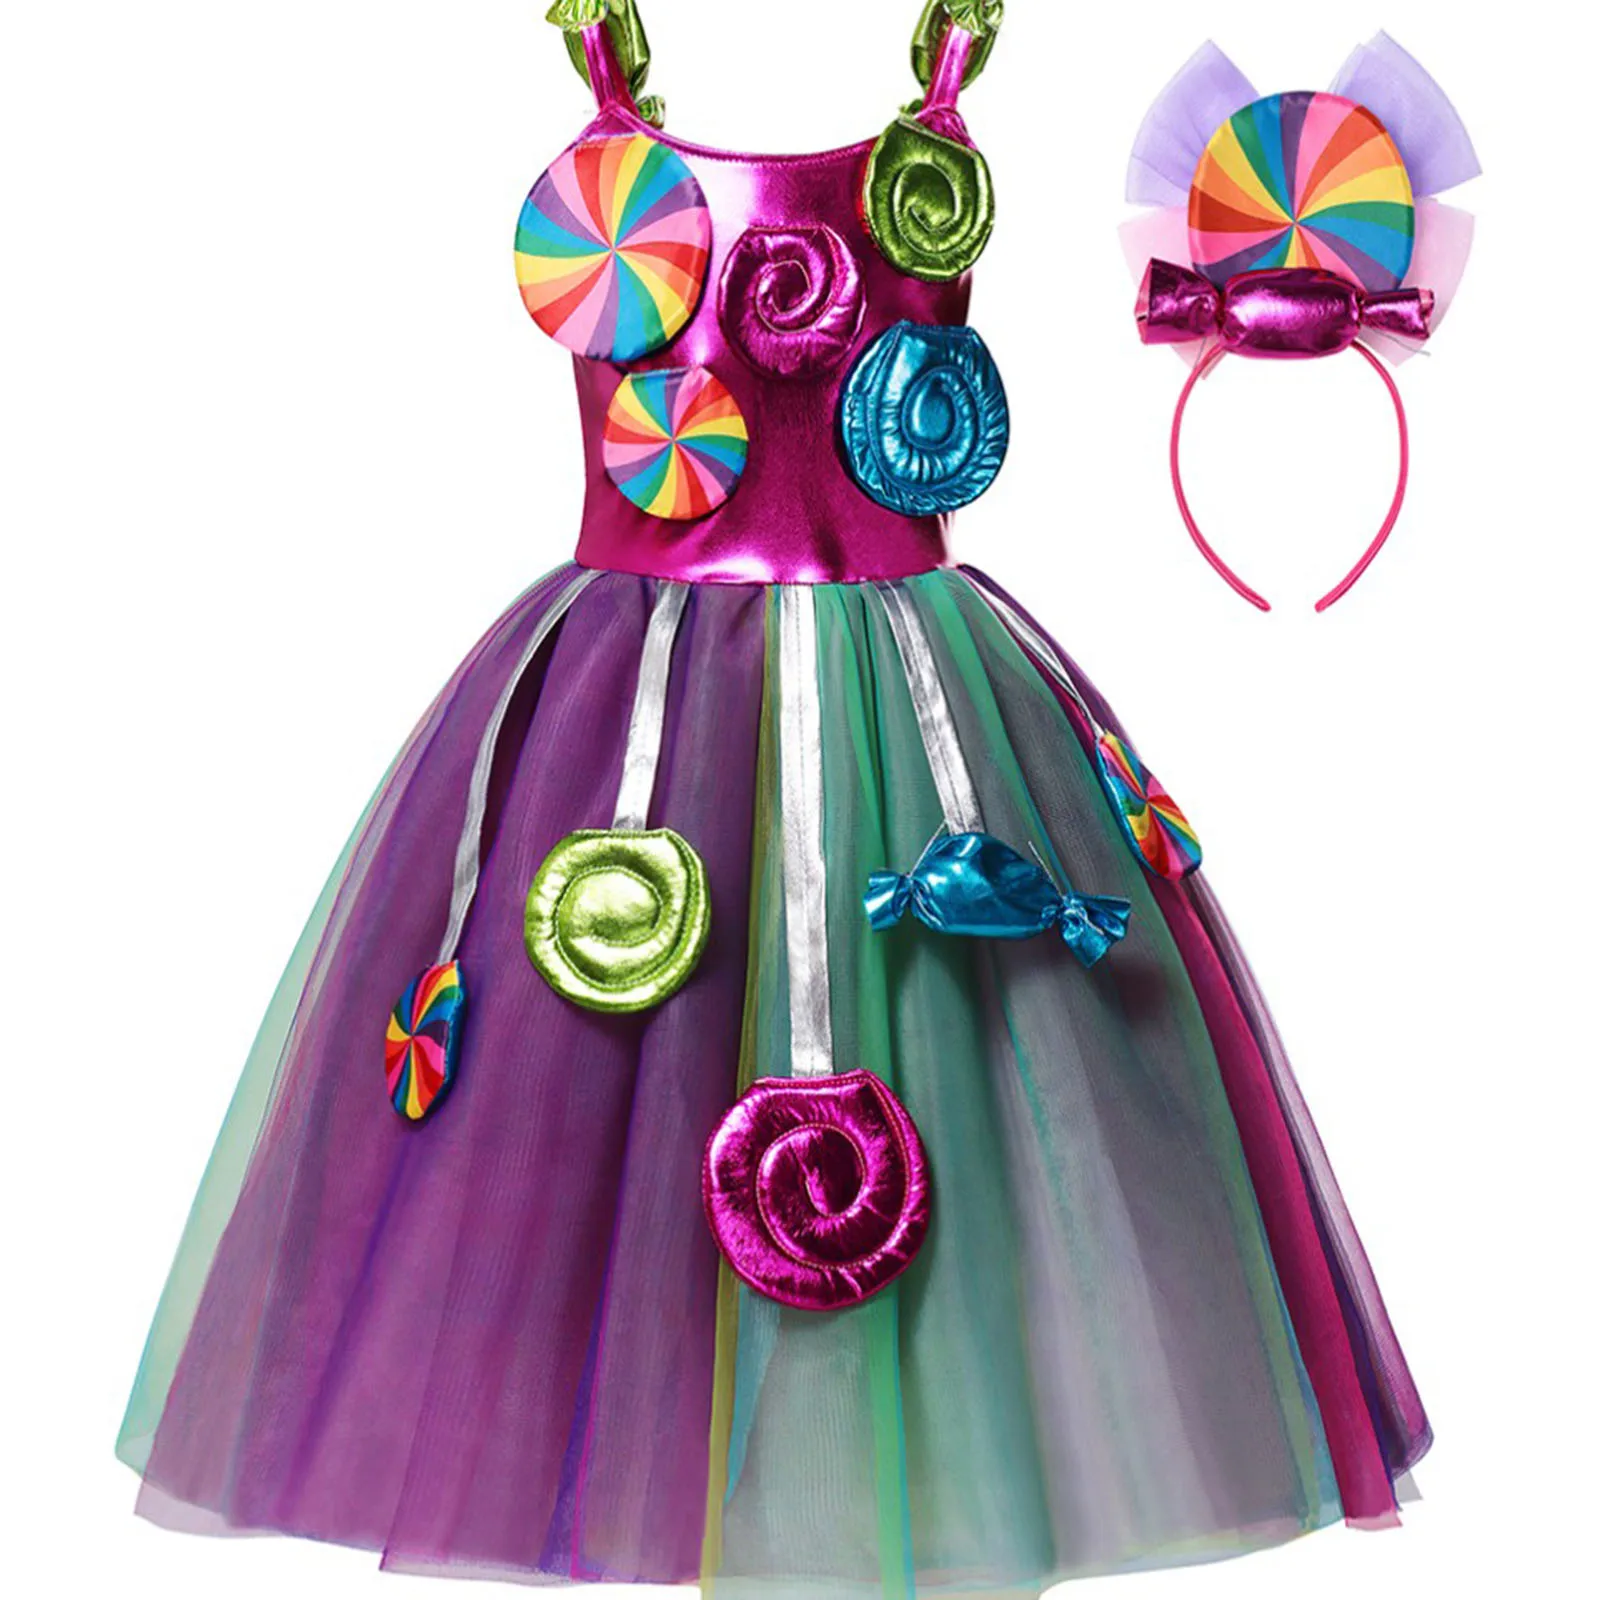 

Kid Girls Princess Rainbow Candy Costume Glittery Mesh Rainbow Tutu Dress Halloween Cosplay Carnival Fancy Birthday Party Outfit